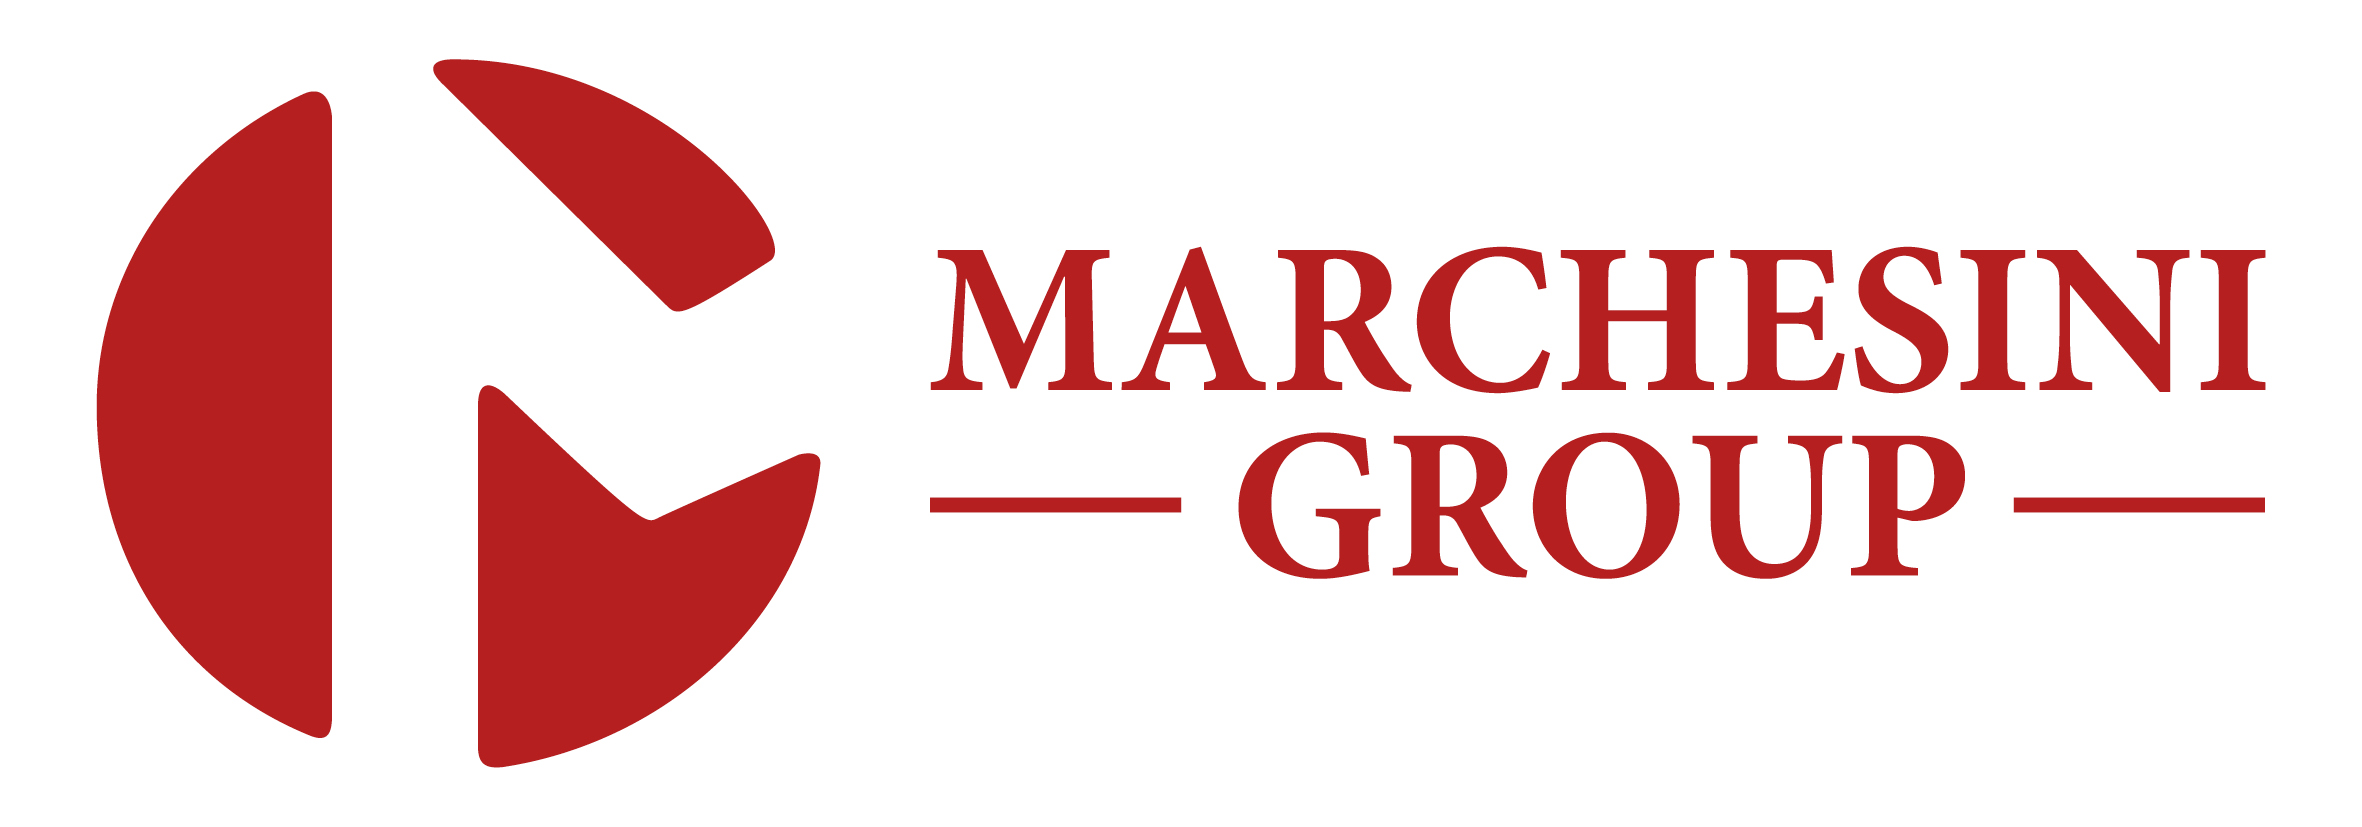 Marchesini Group Oriz Col